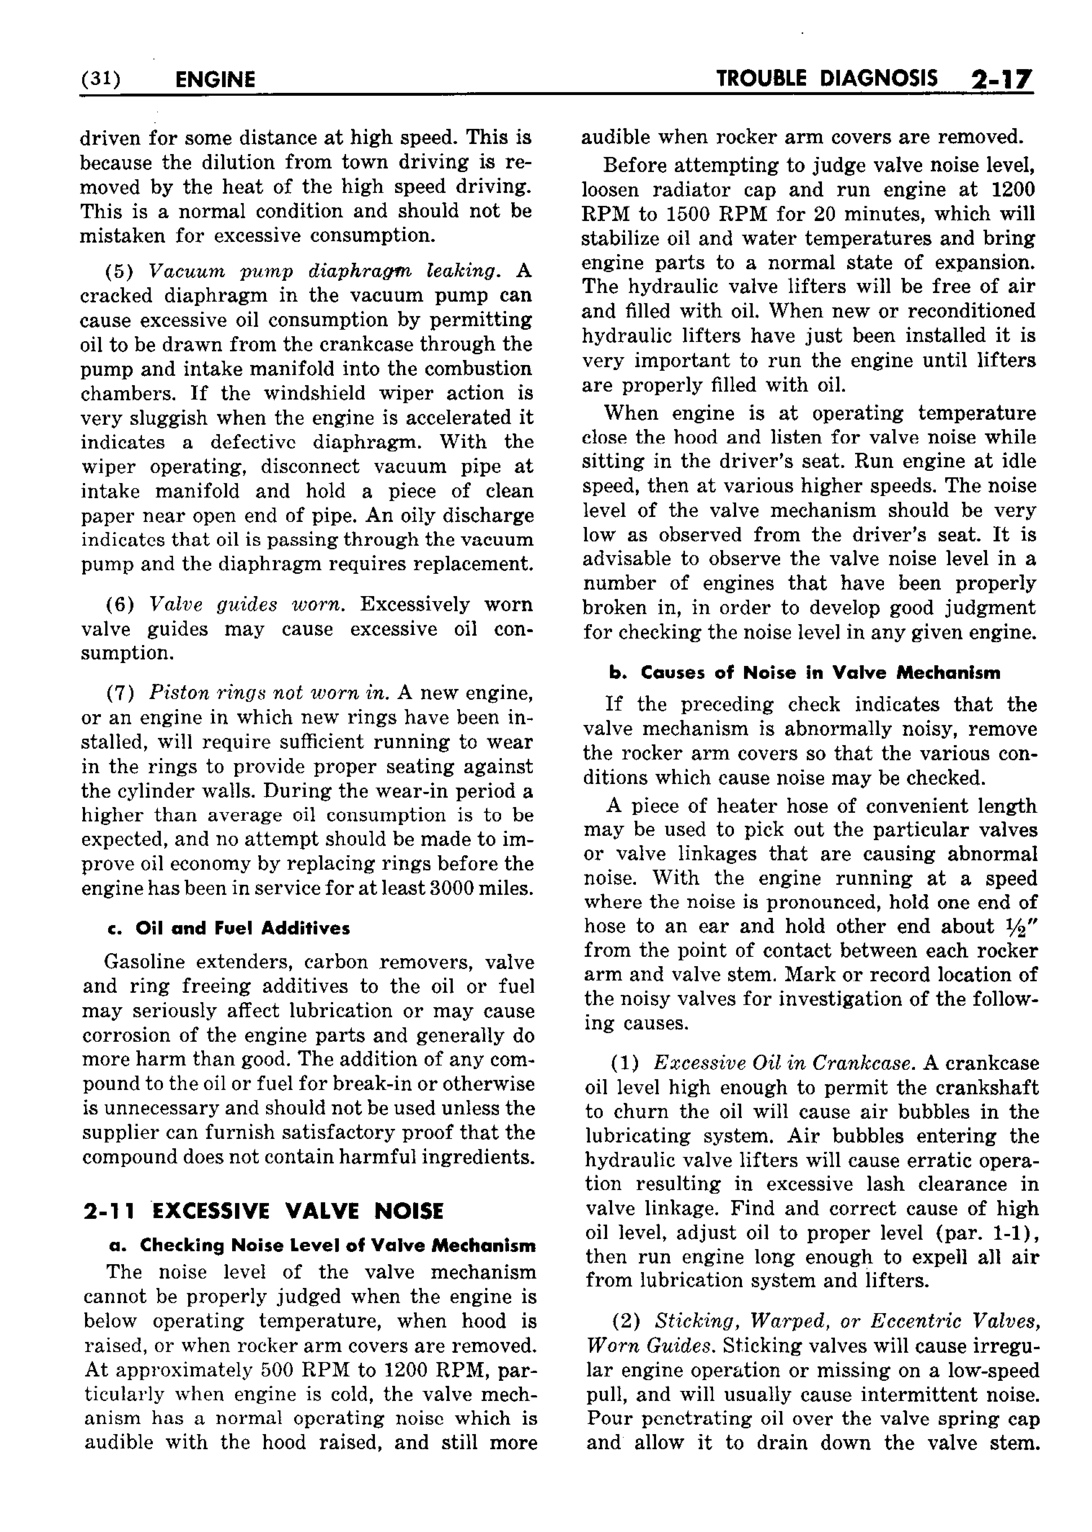 n_03 1953 Buick Shop Manual - Engine-017-017.jpg